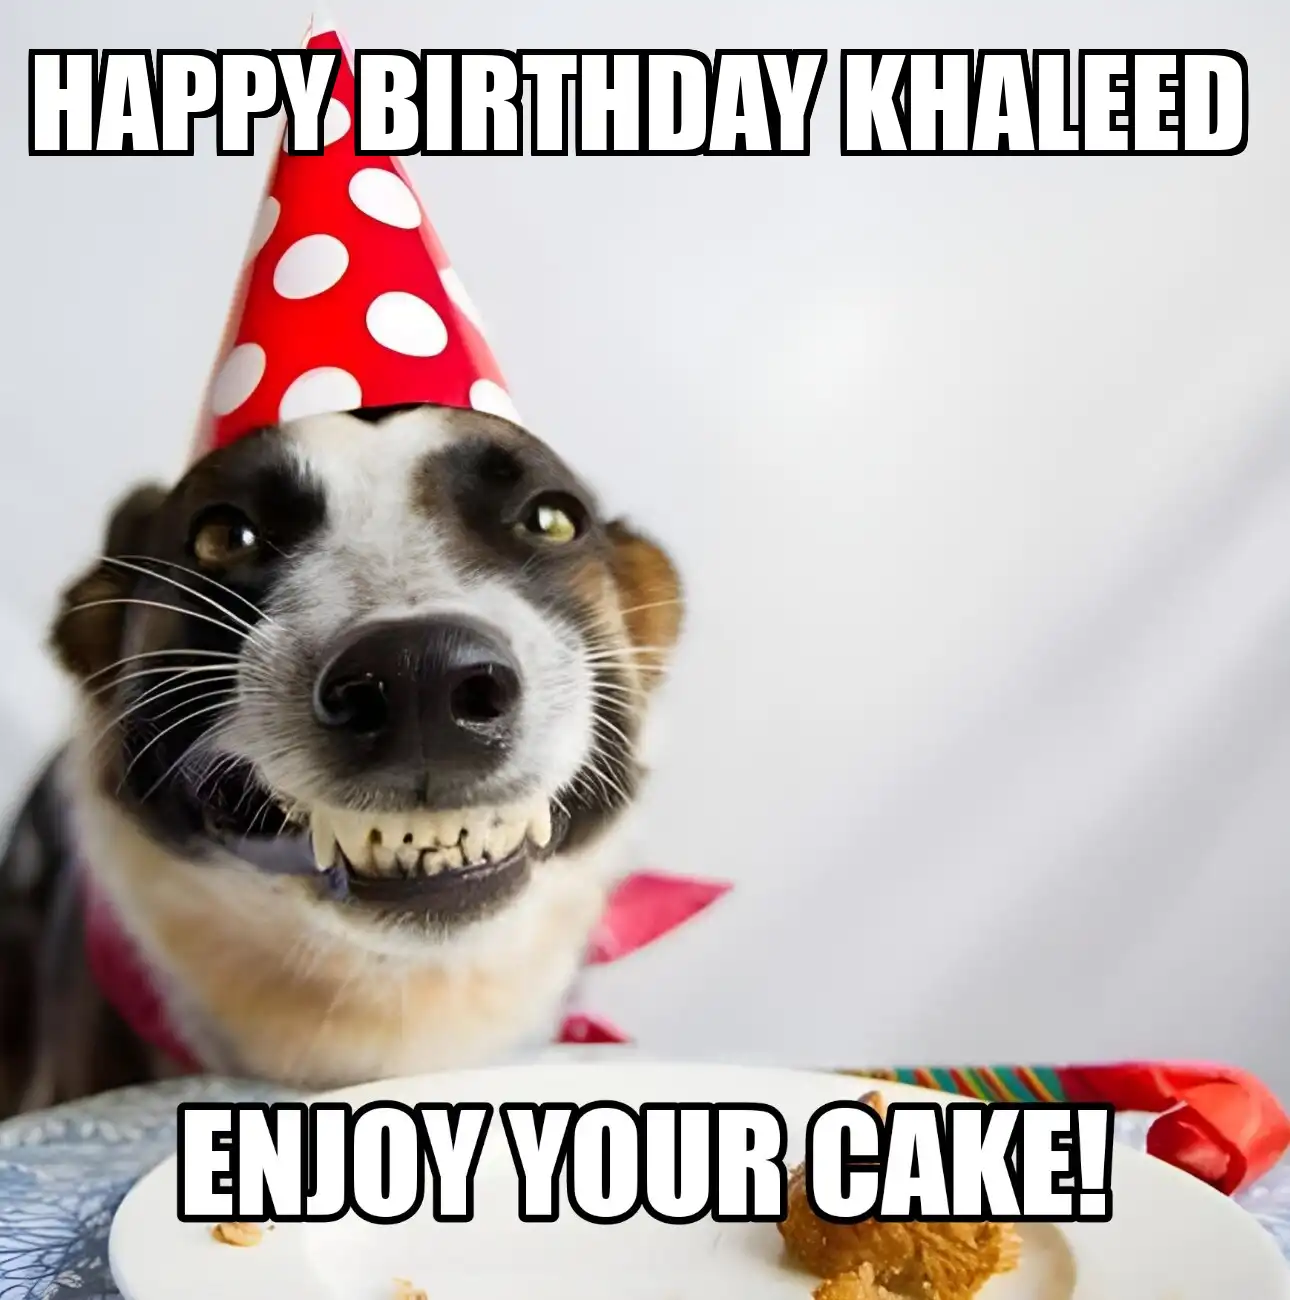 Happy Birthday Khaleed Enjoy Your Cake Dog Meme